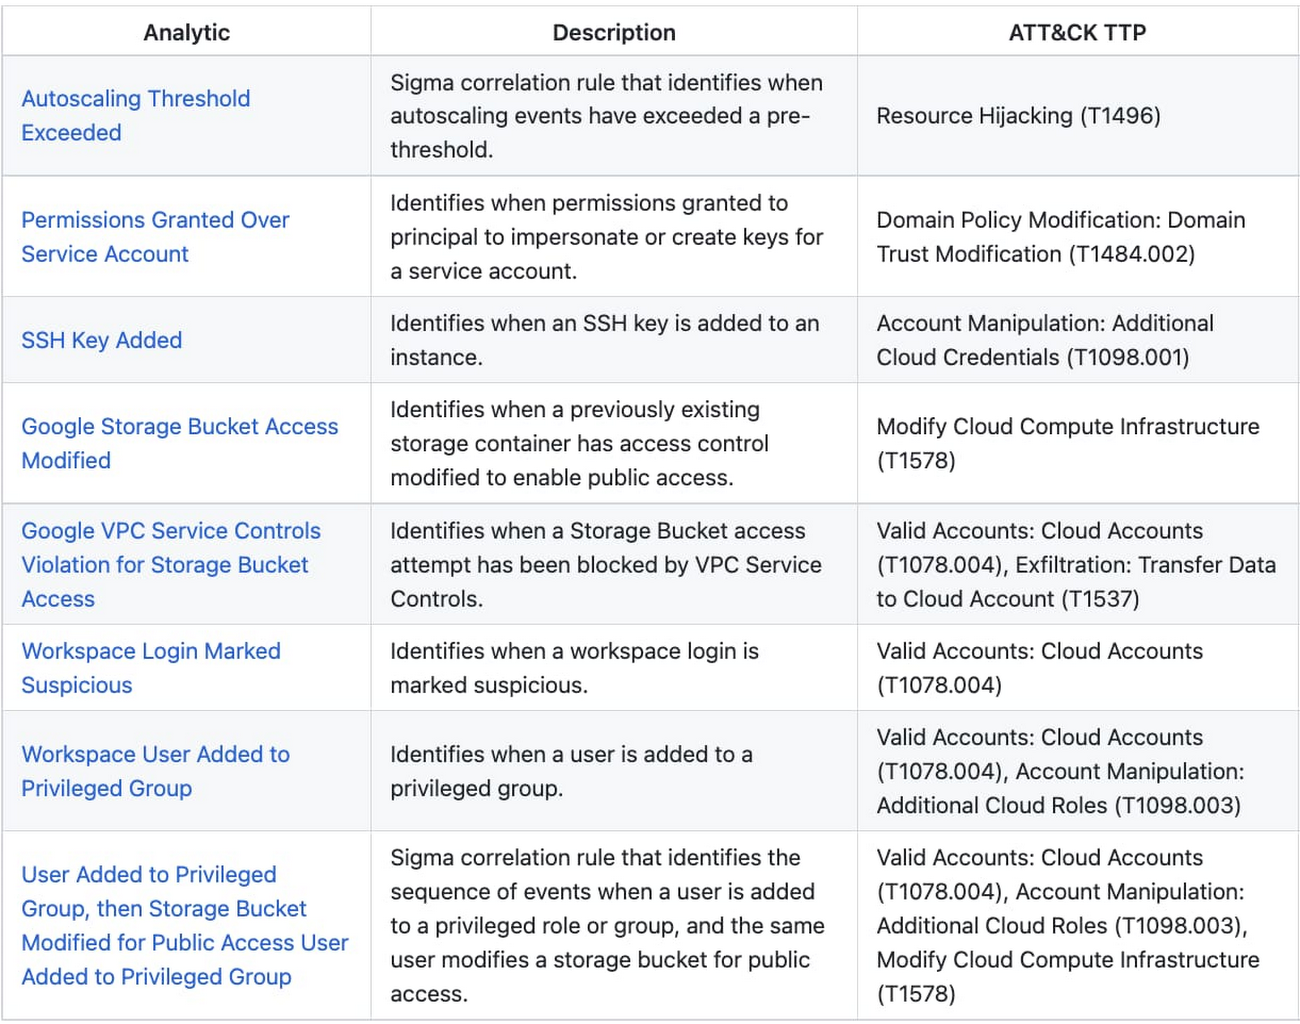 https://storage.googleapis.com/gweb-cloudblog-publish/images/3_Cloud_Analytics_by_MITRE.max-1300x1300.jpg